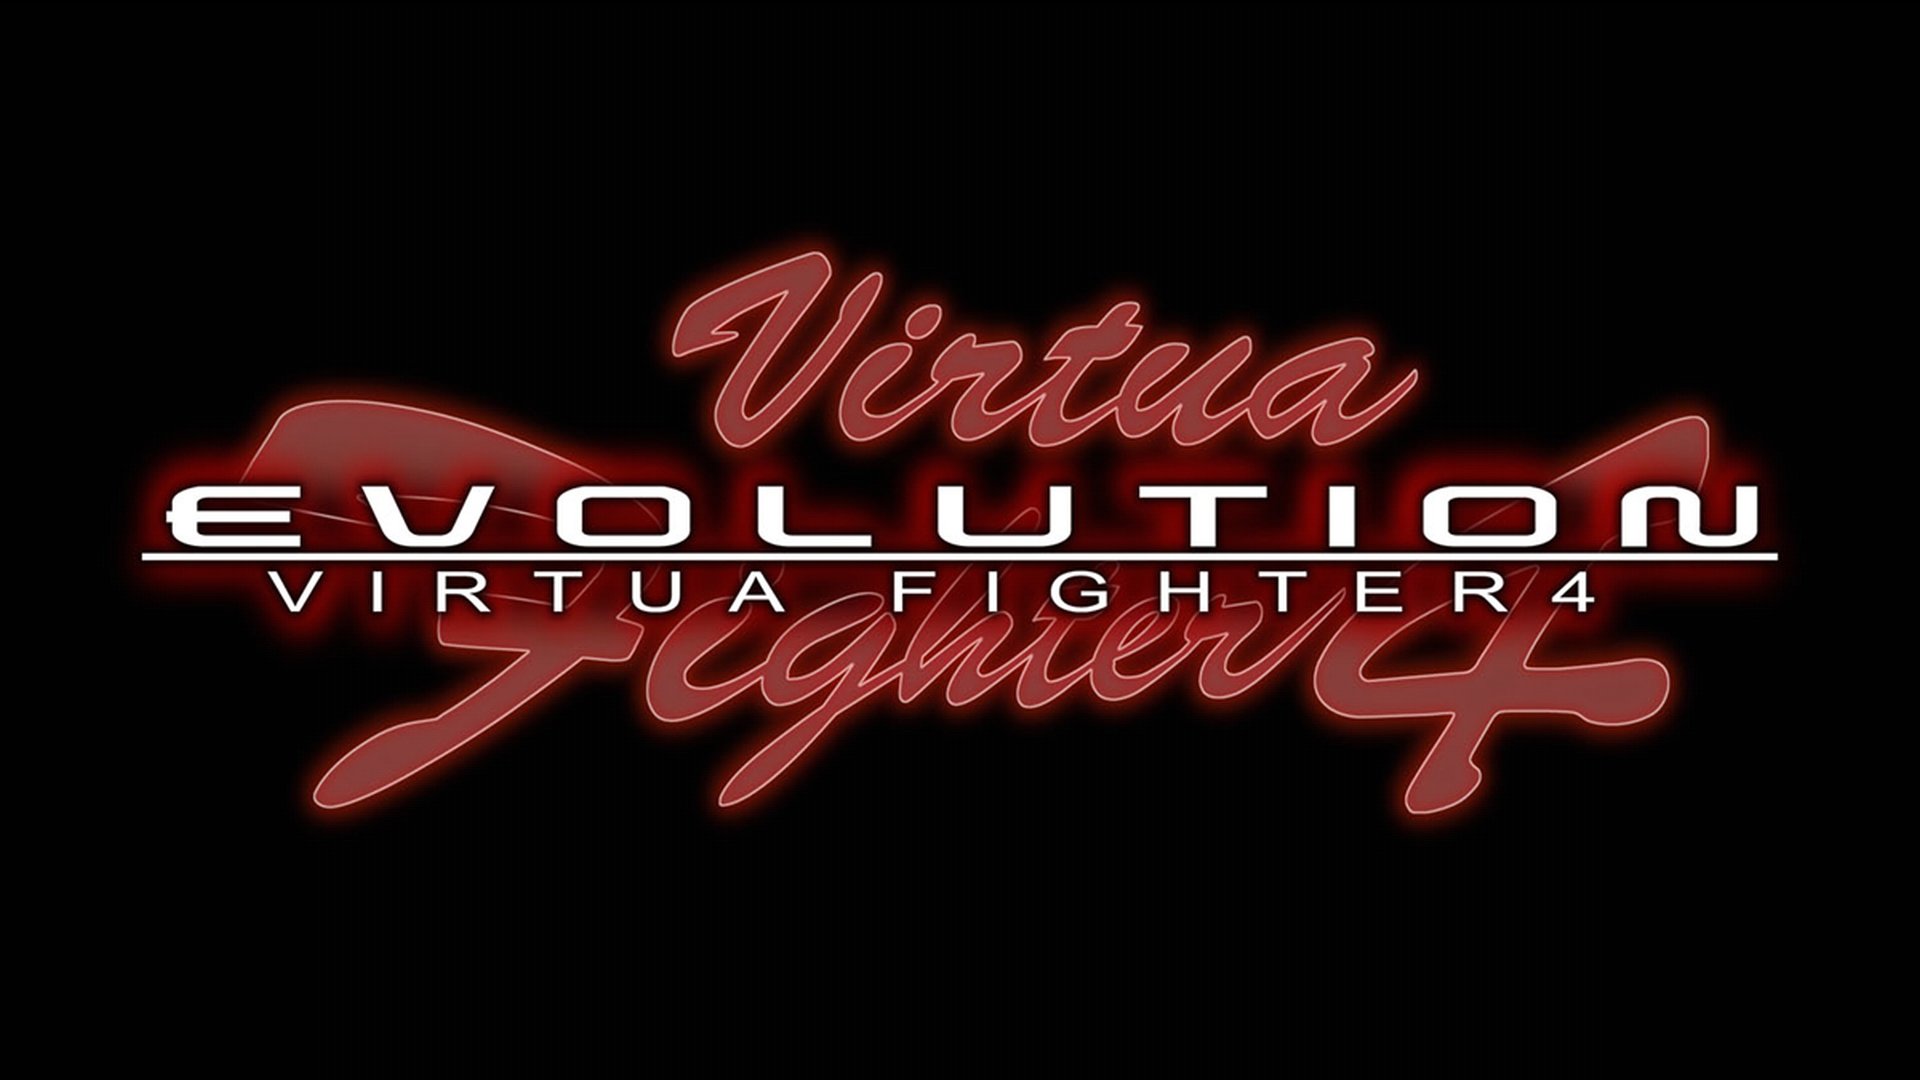 Virtua Fighter 4 Wallpapers